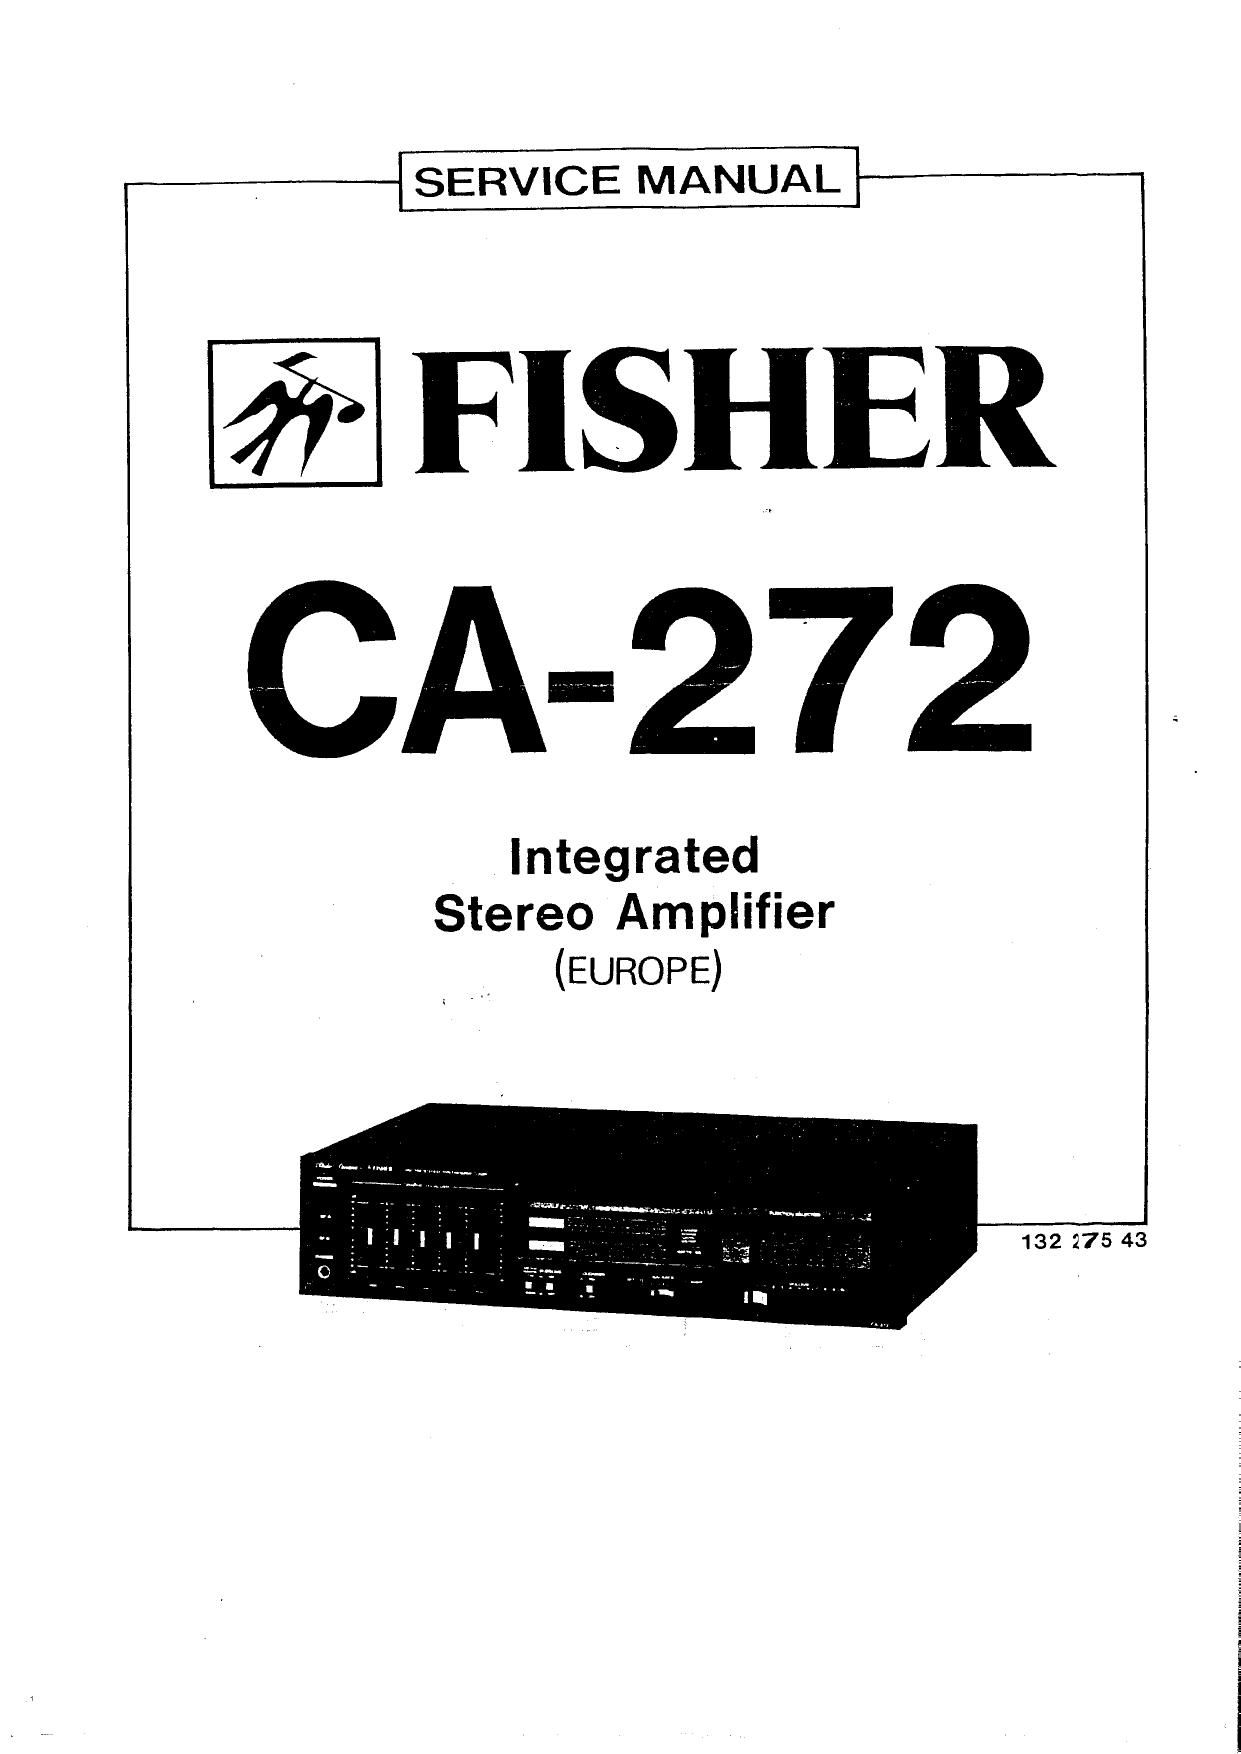 Fisher CA 272 Service Manual